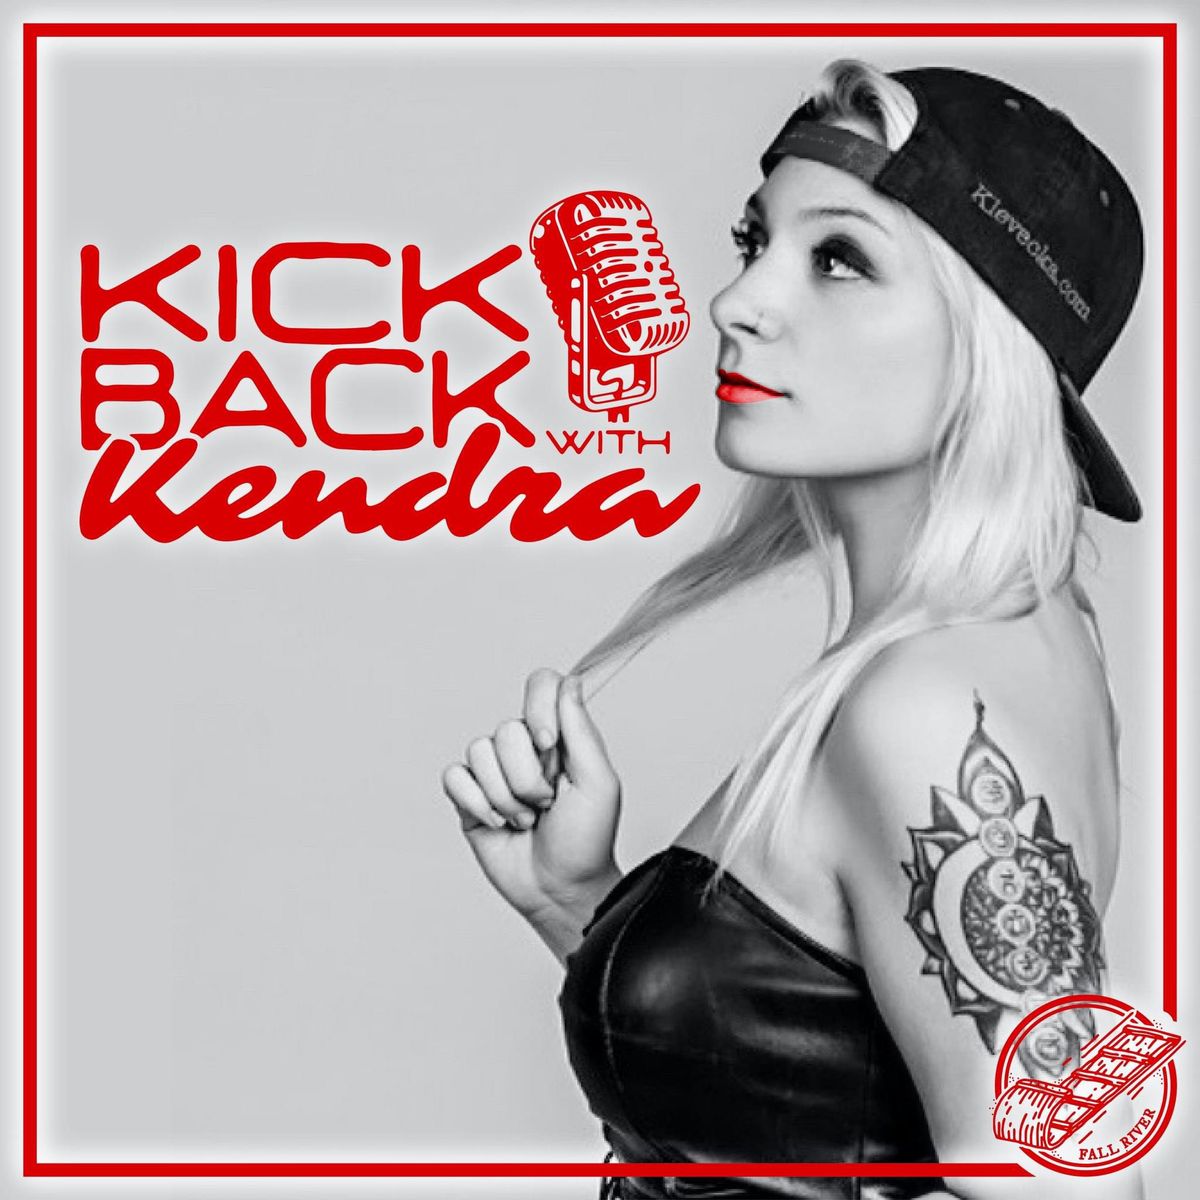 Kick back with Kendra